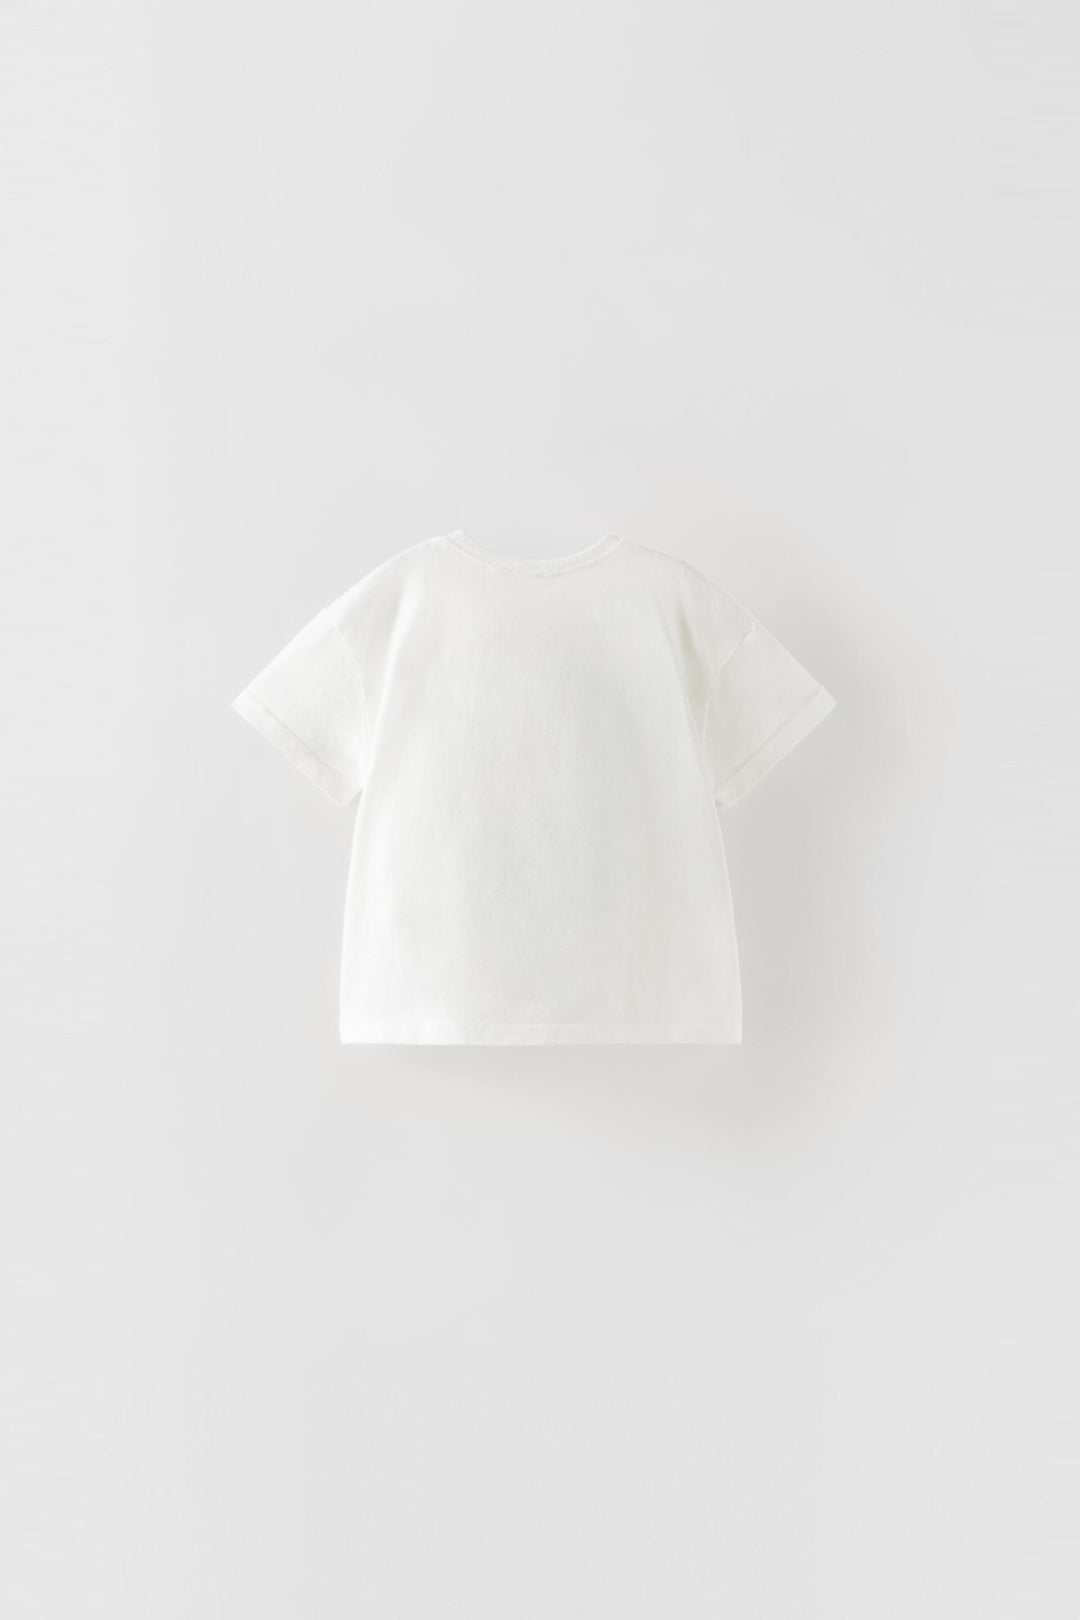 T-Shirt Bebe marque_Zara, genre_Fille, Enfant Moudda Tunisie1